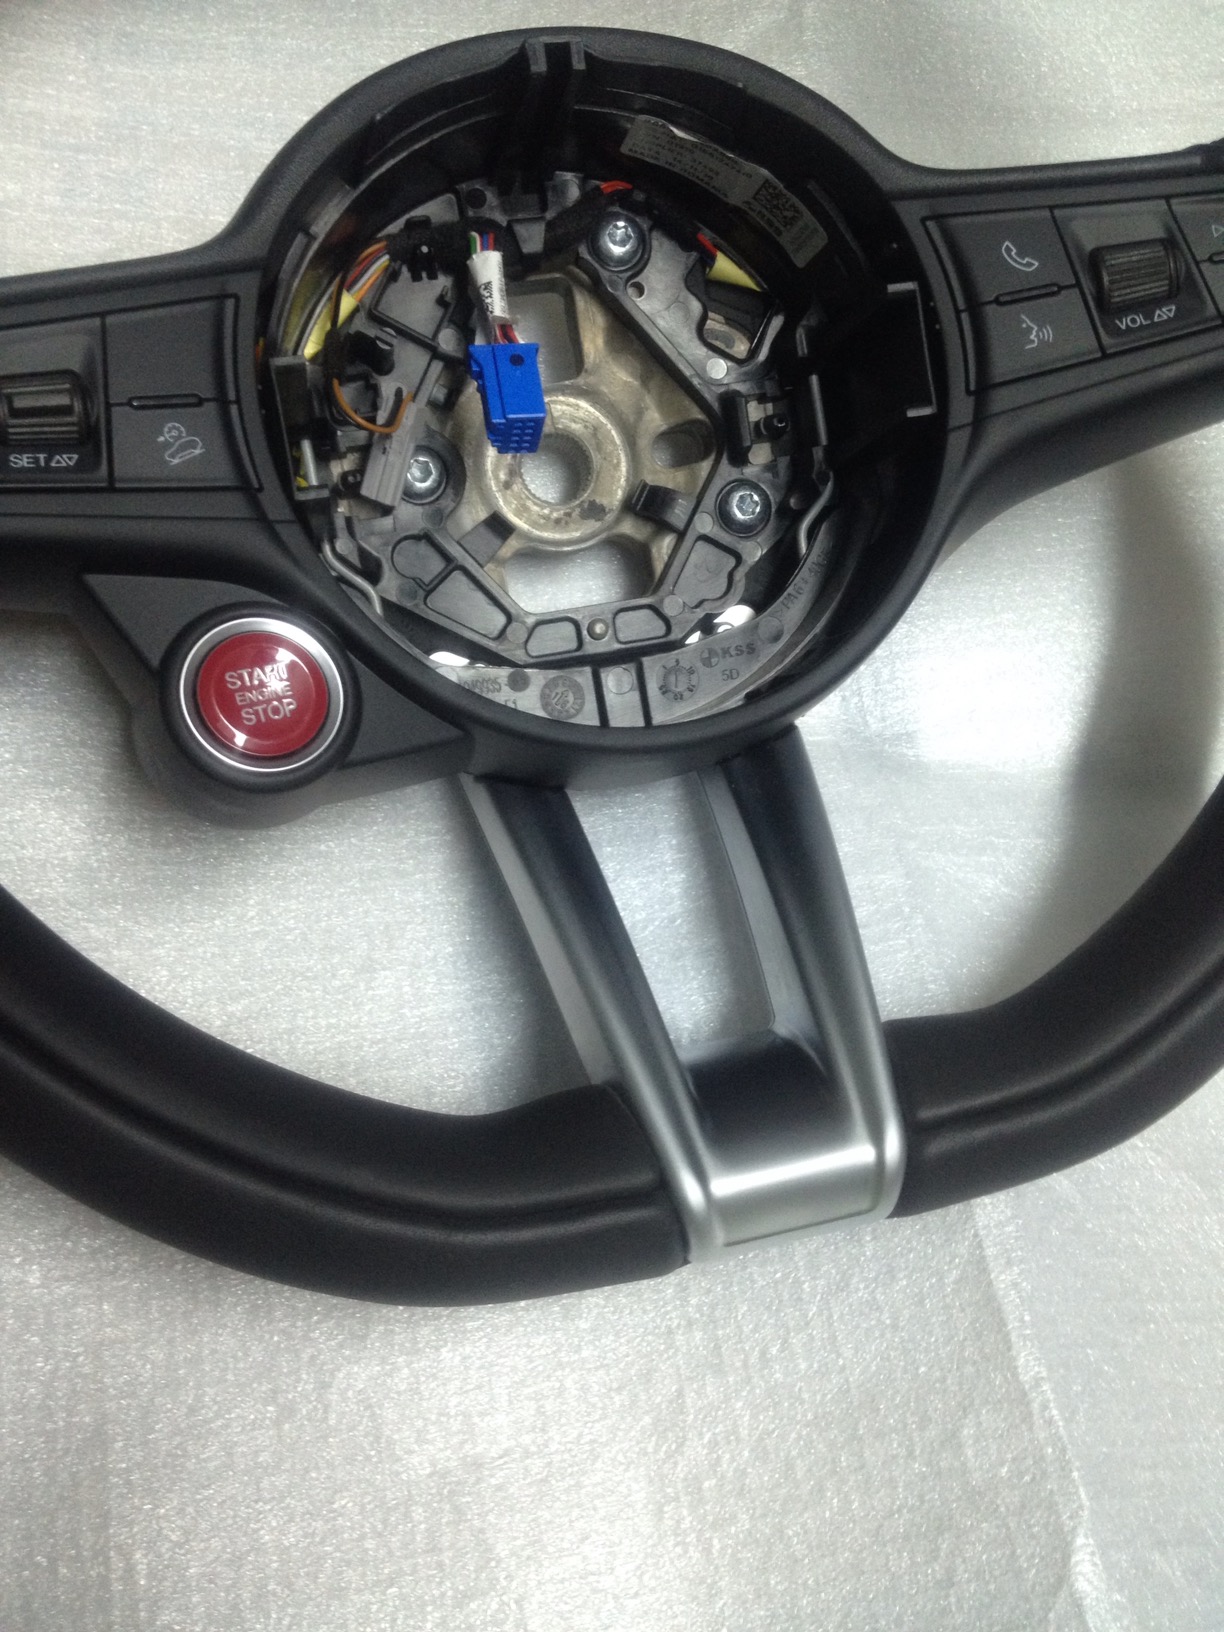 Alfa steering wheel Stelvio; Giulia New 01561247410 flat bottom